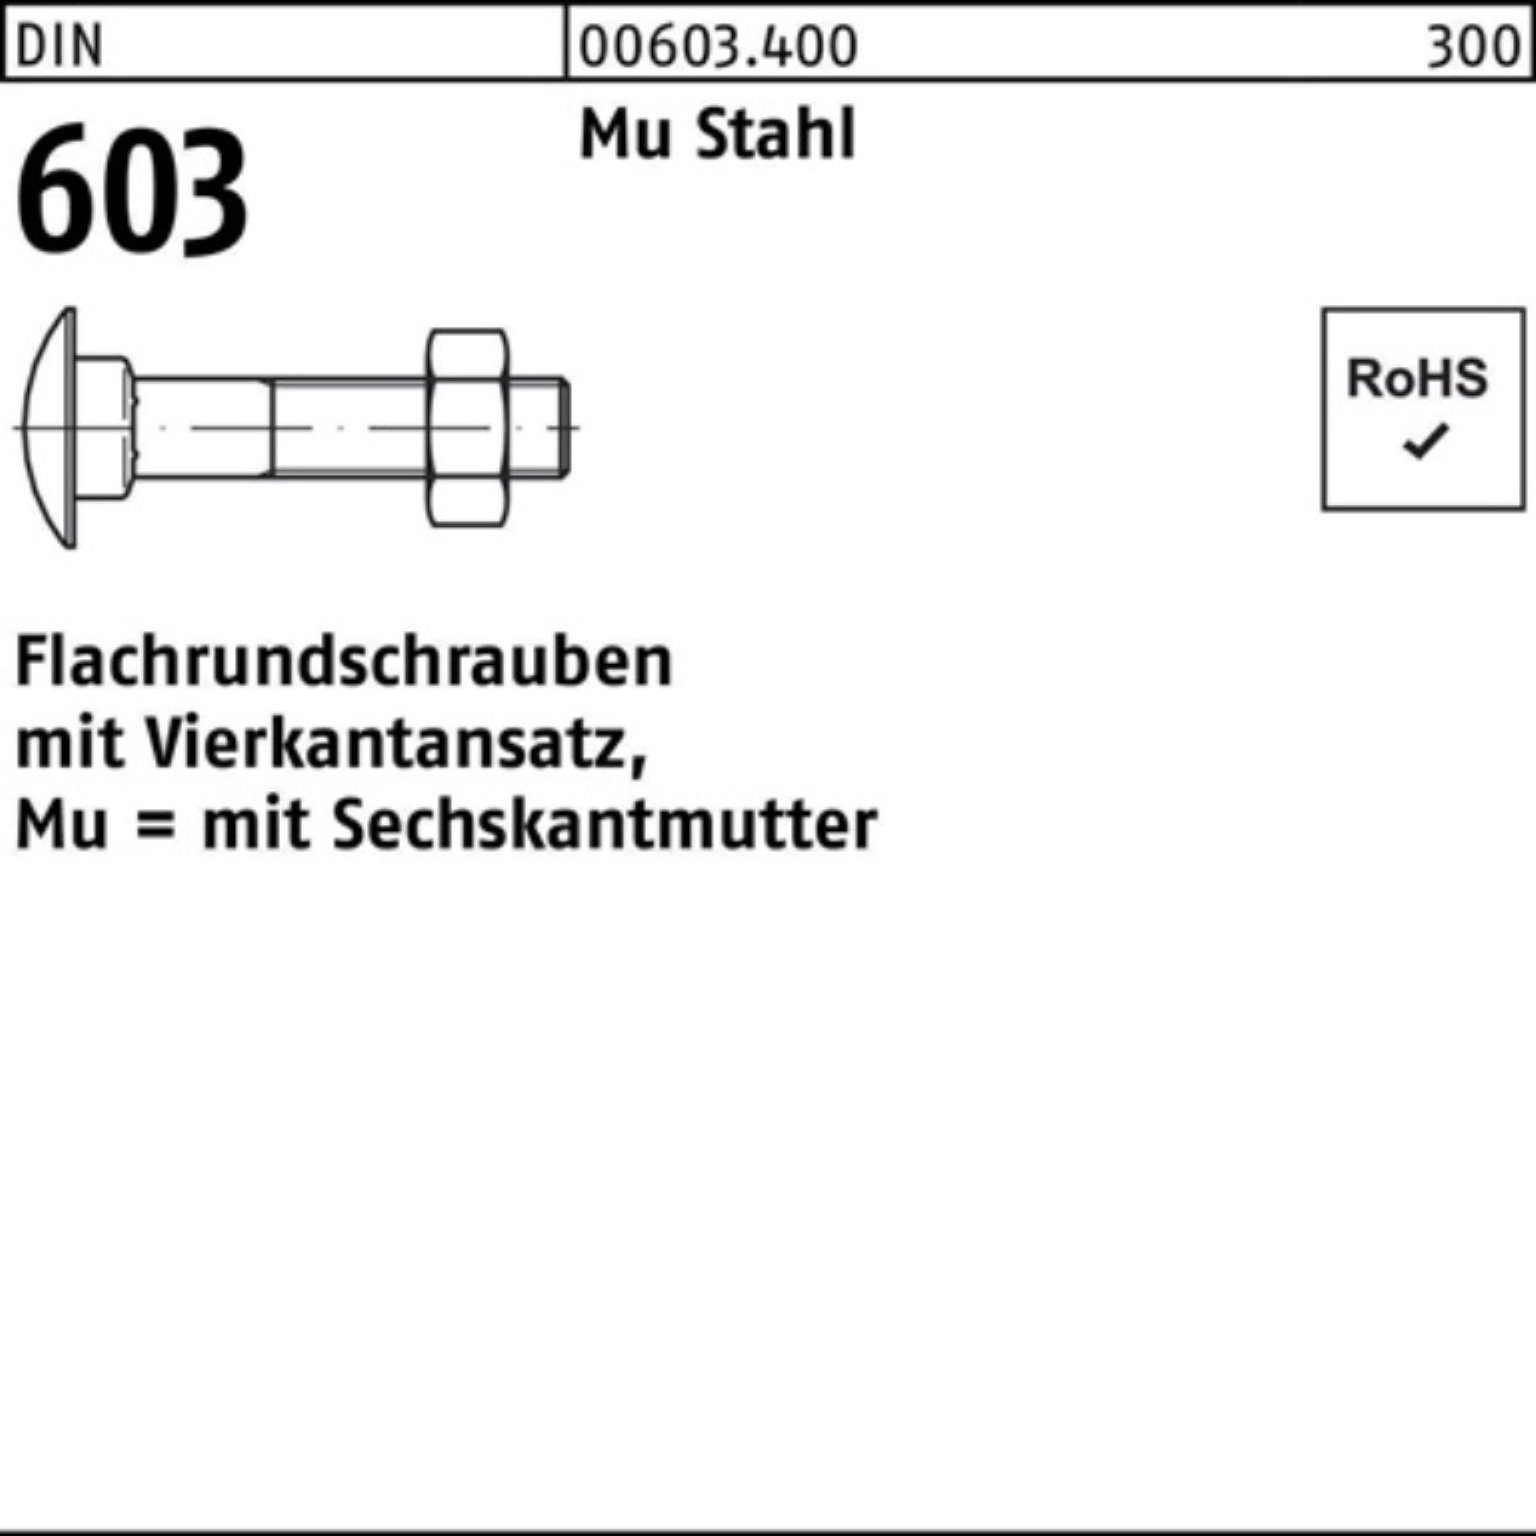 Vierkantansatz/6-ktmutter M6x100 Flachrundschraube Reyher 603 Pack 100er DIN Schraube